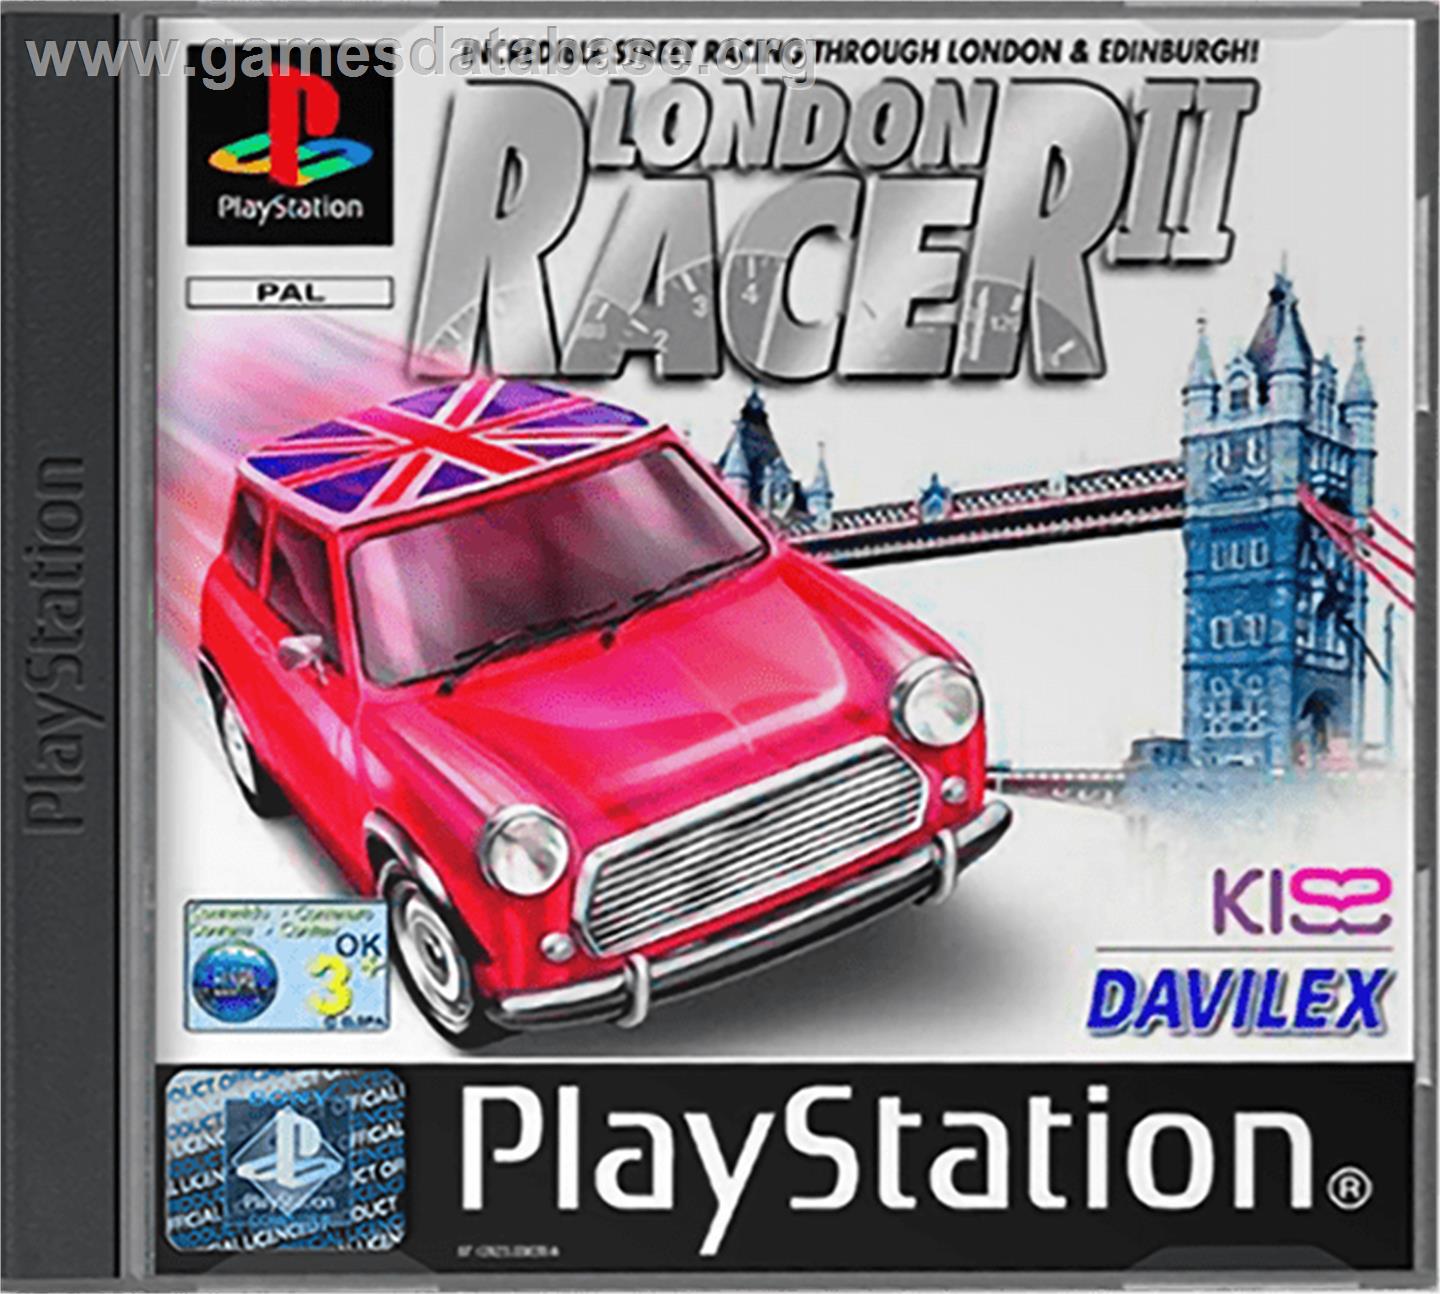 London Racer II - Sony Playstation - Artwork - Box